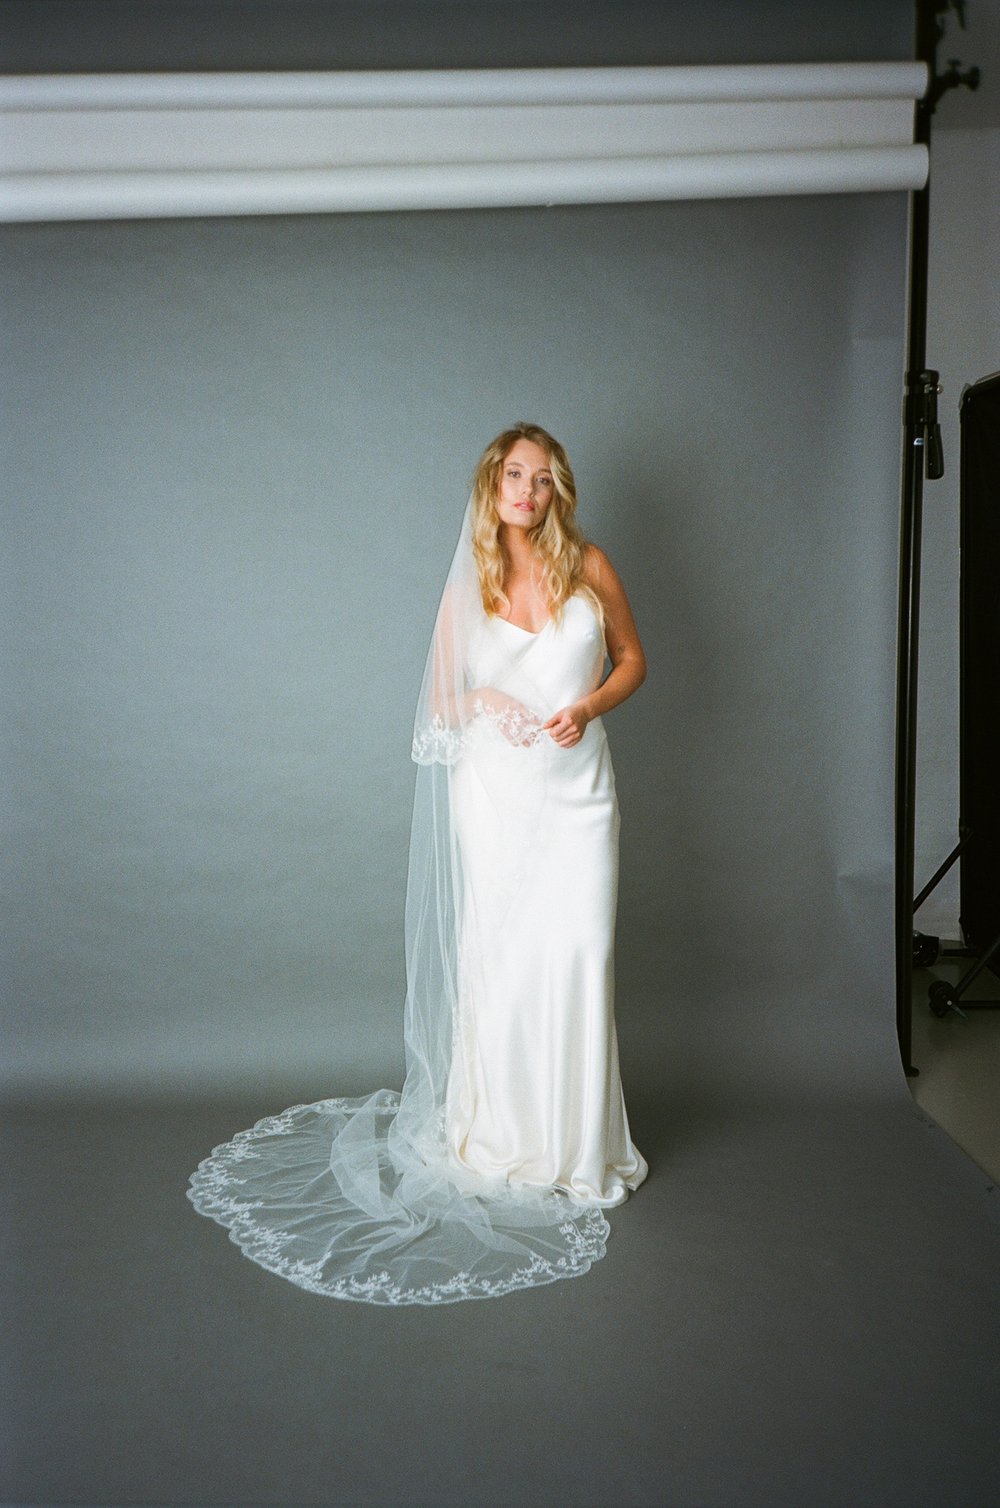 Analogue-shoot-Hollie-Cornish-photographer-Kate-Beaumont-wedding-gowns-Sheffield-21.jpg